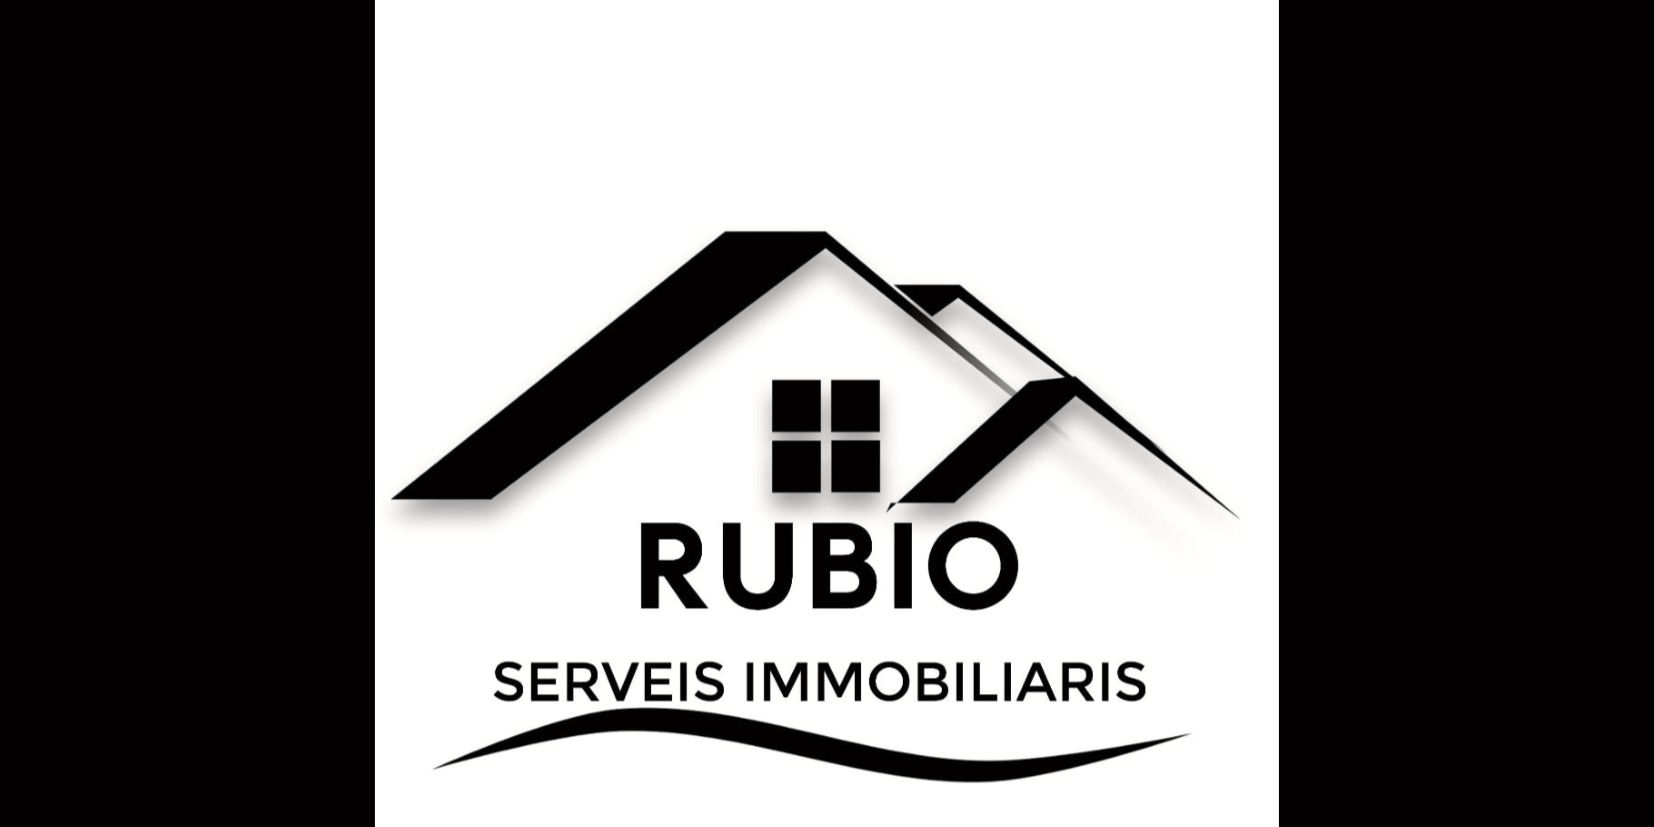 RUBIO SERVEIS IMMOBILIARIS